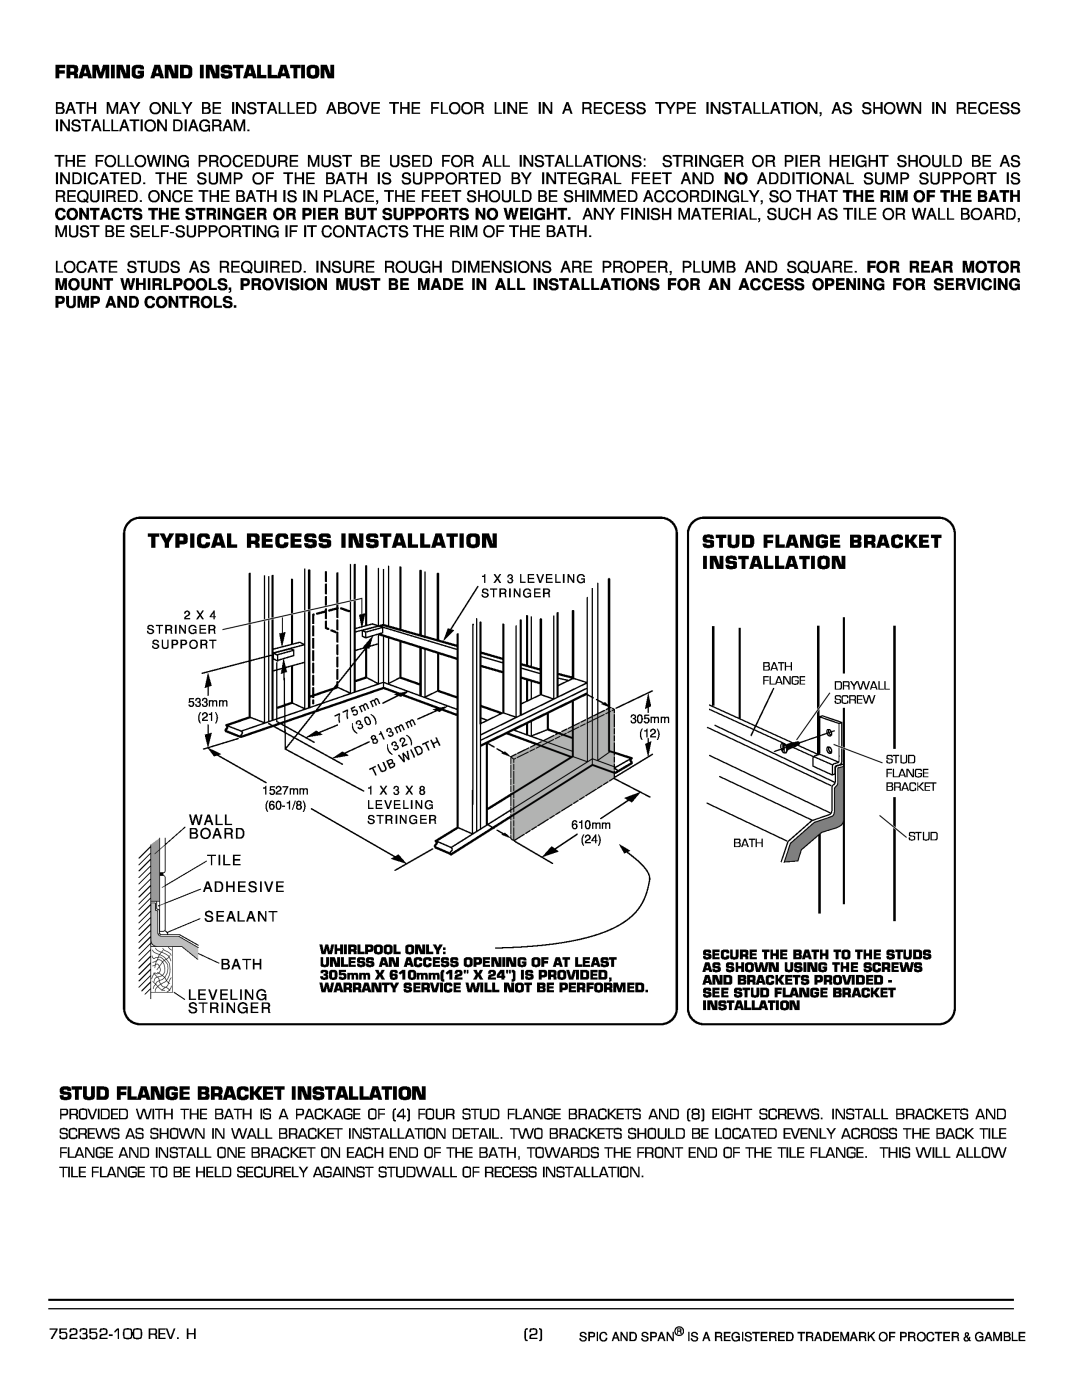 American Standard 2703.XXXW Series Typical Recess Installation, Framing And Installation, Stud Flange Bracket Installation 